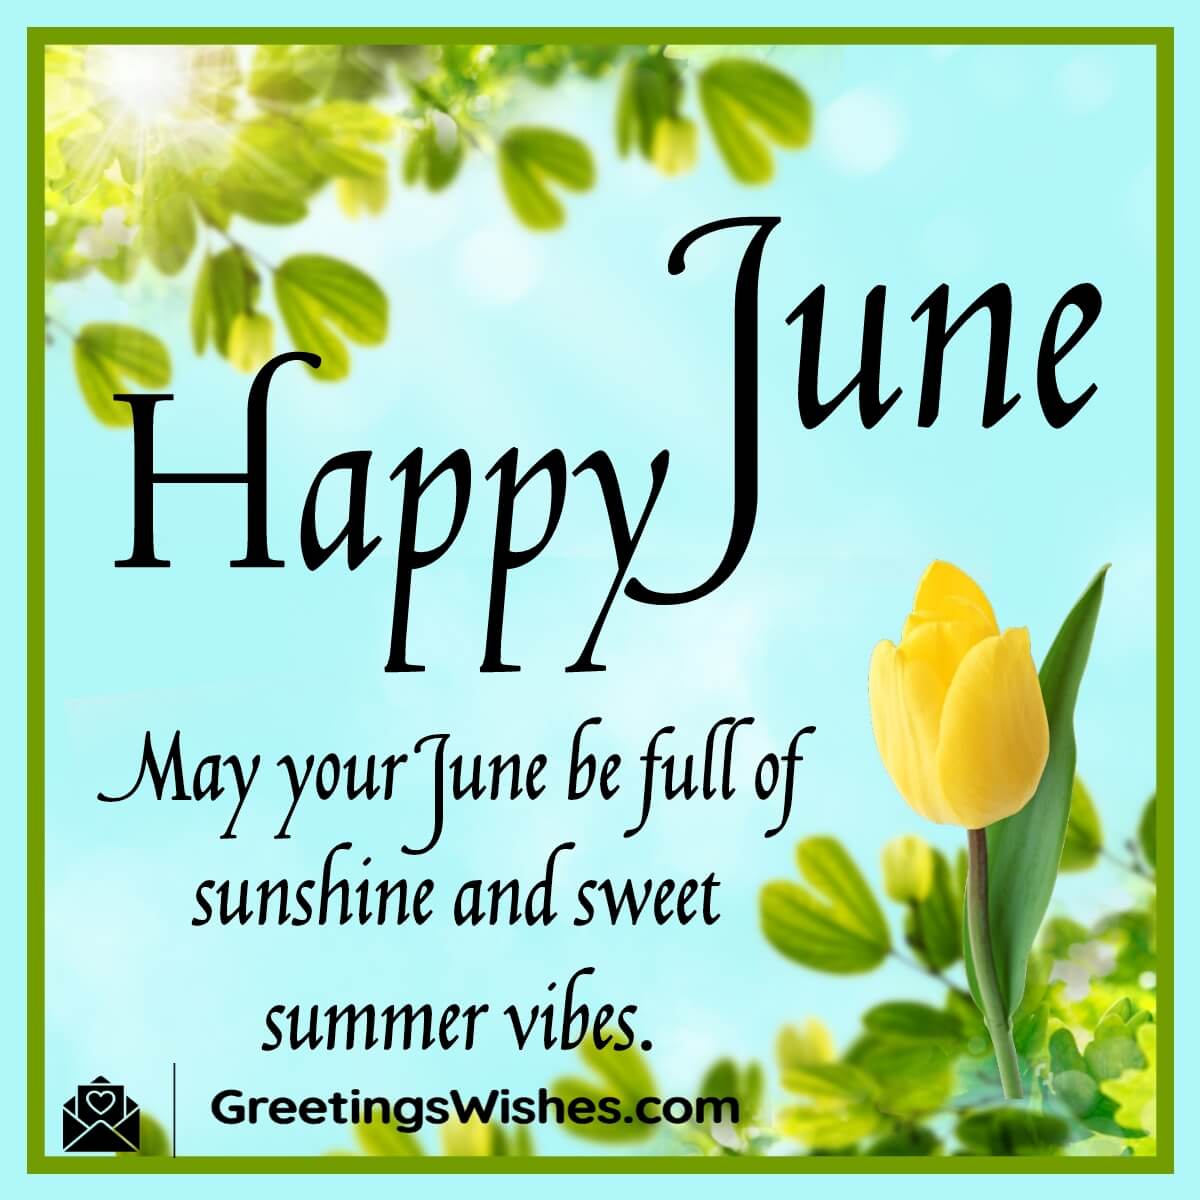 Happy June Wishes